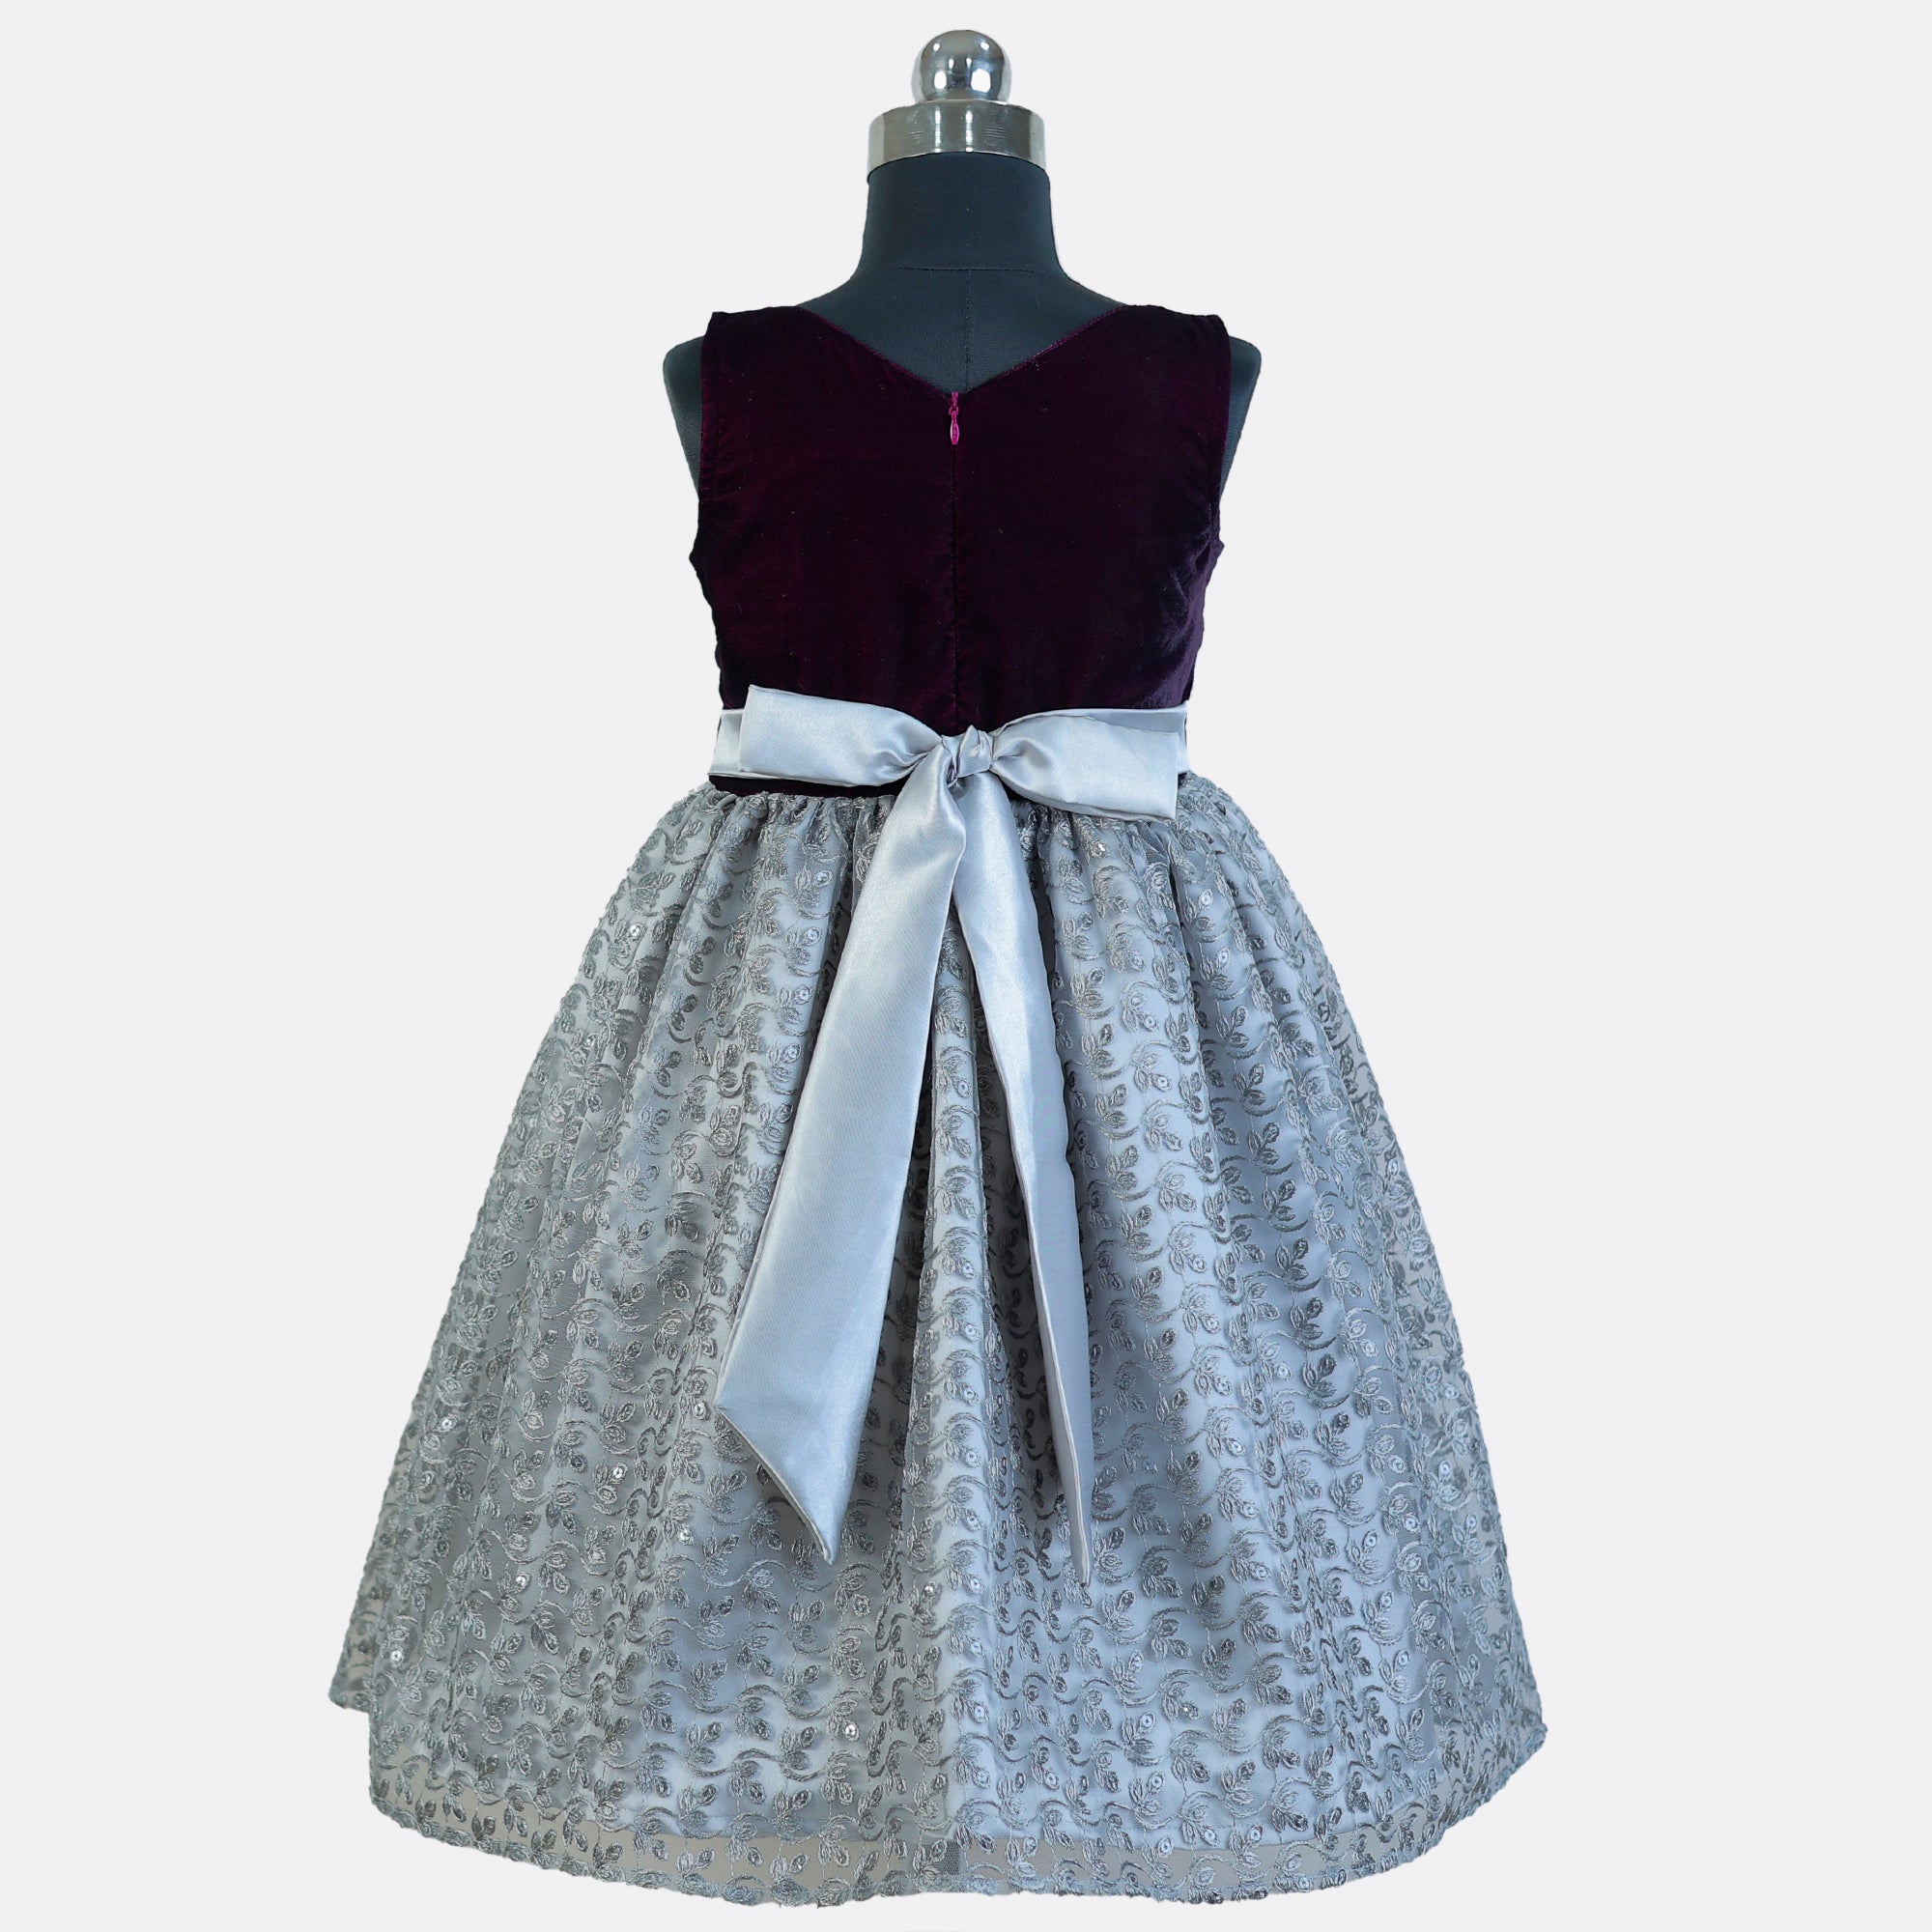 Shop the Latest Girls Fancy Dresses Online - Affordable & Adorable